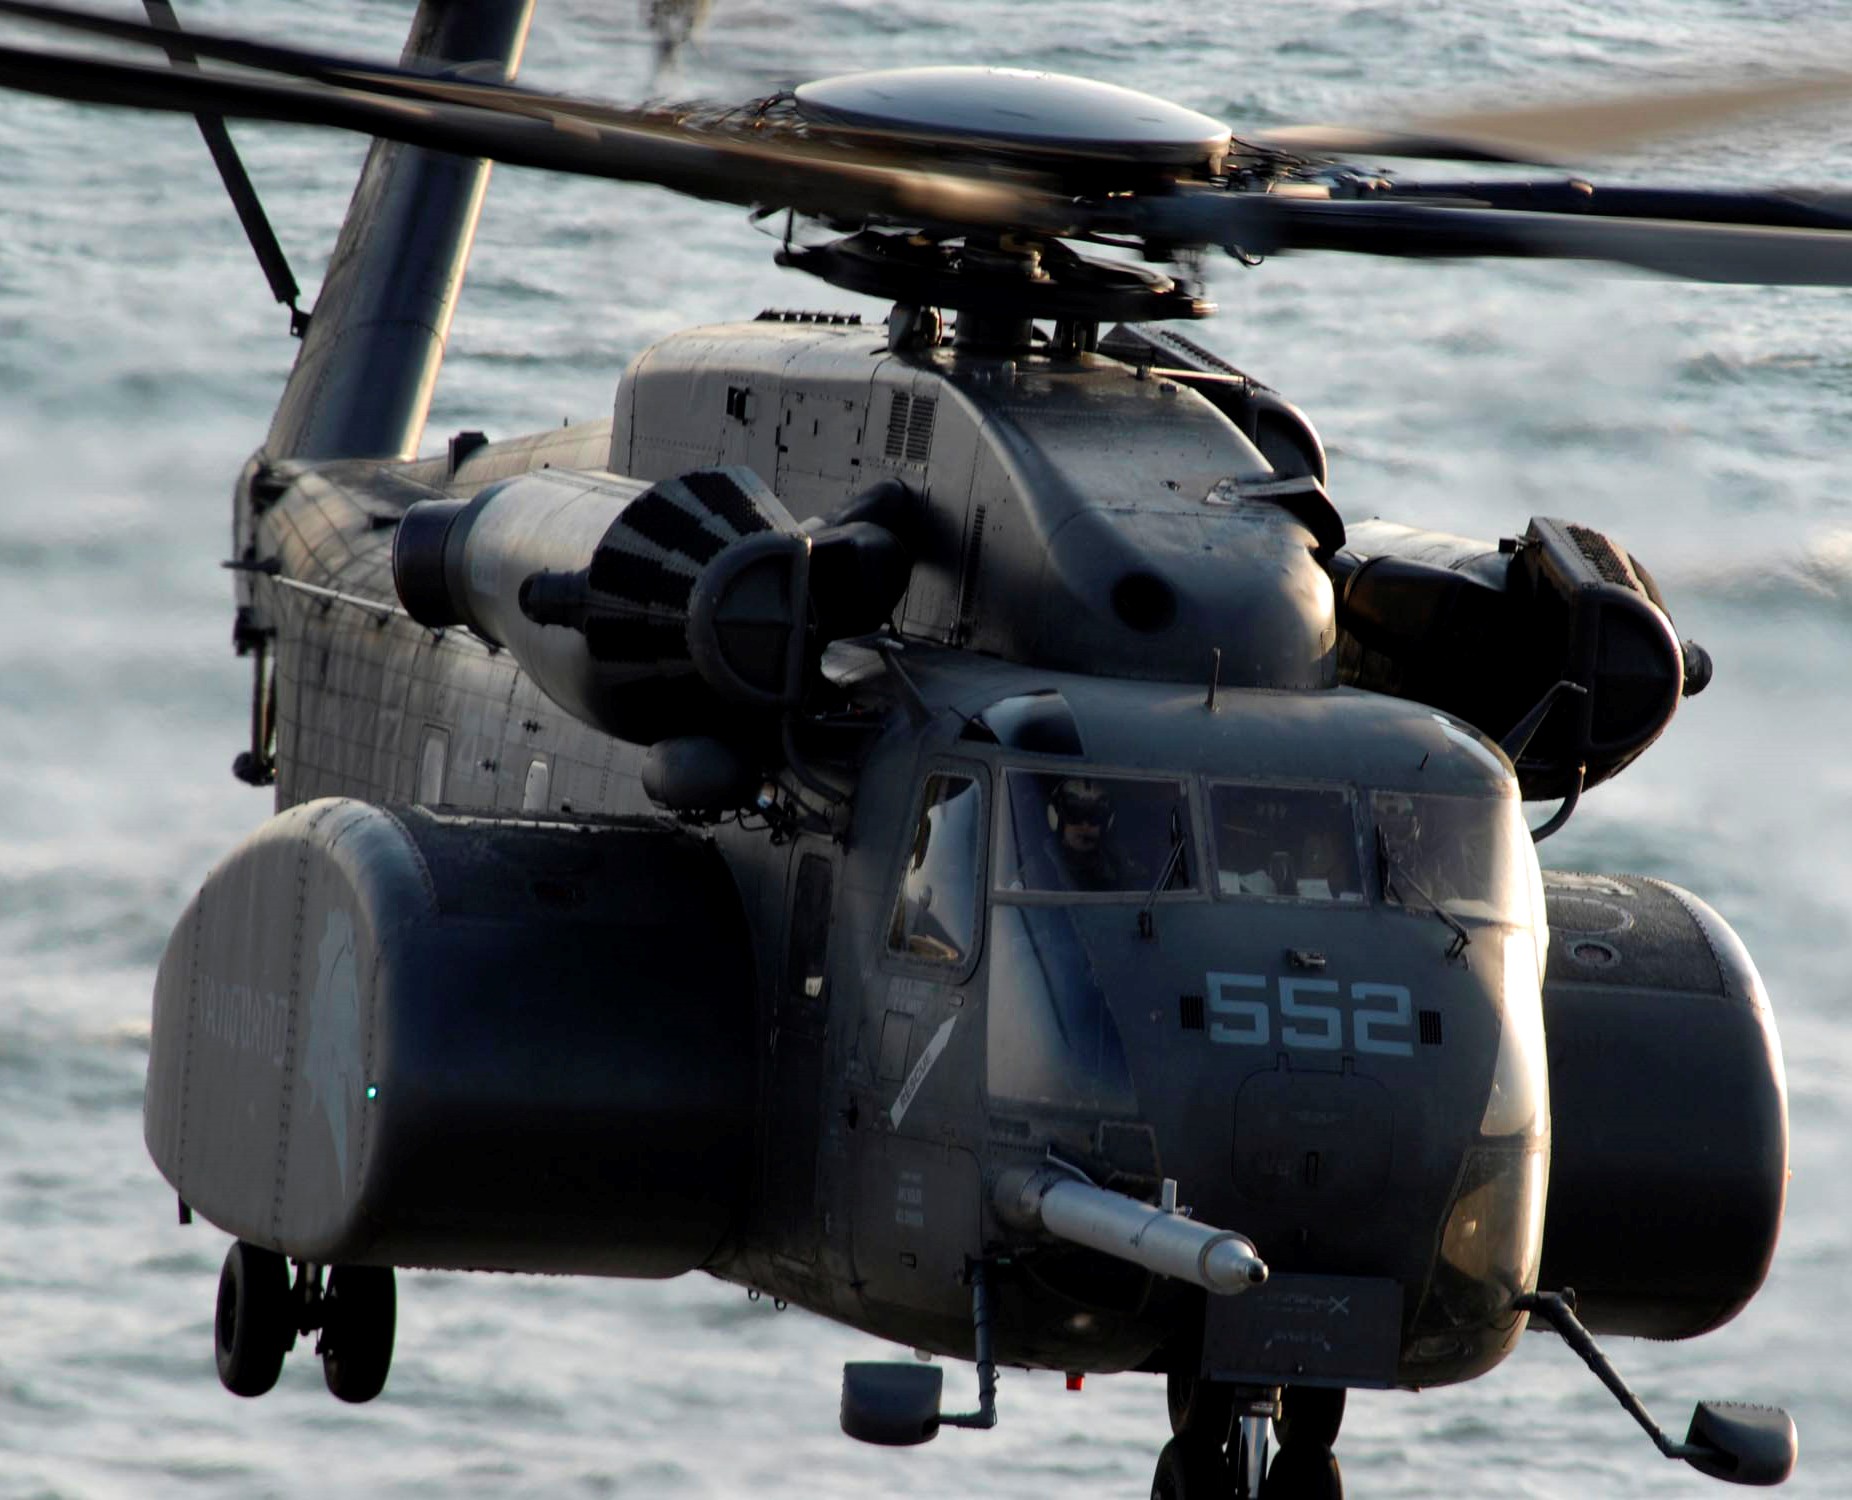 hm-14 vanguard helicopter mine countermeasures squadron navy mh-53e sea dragon 33